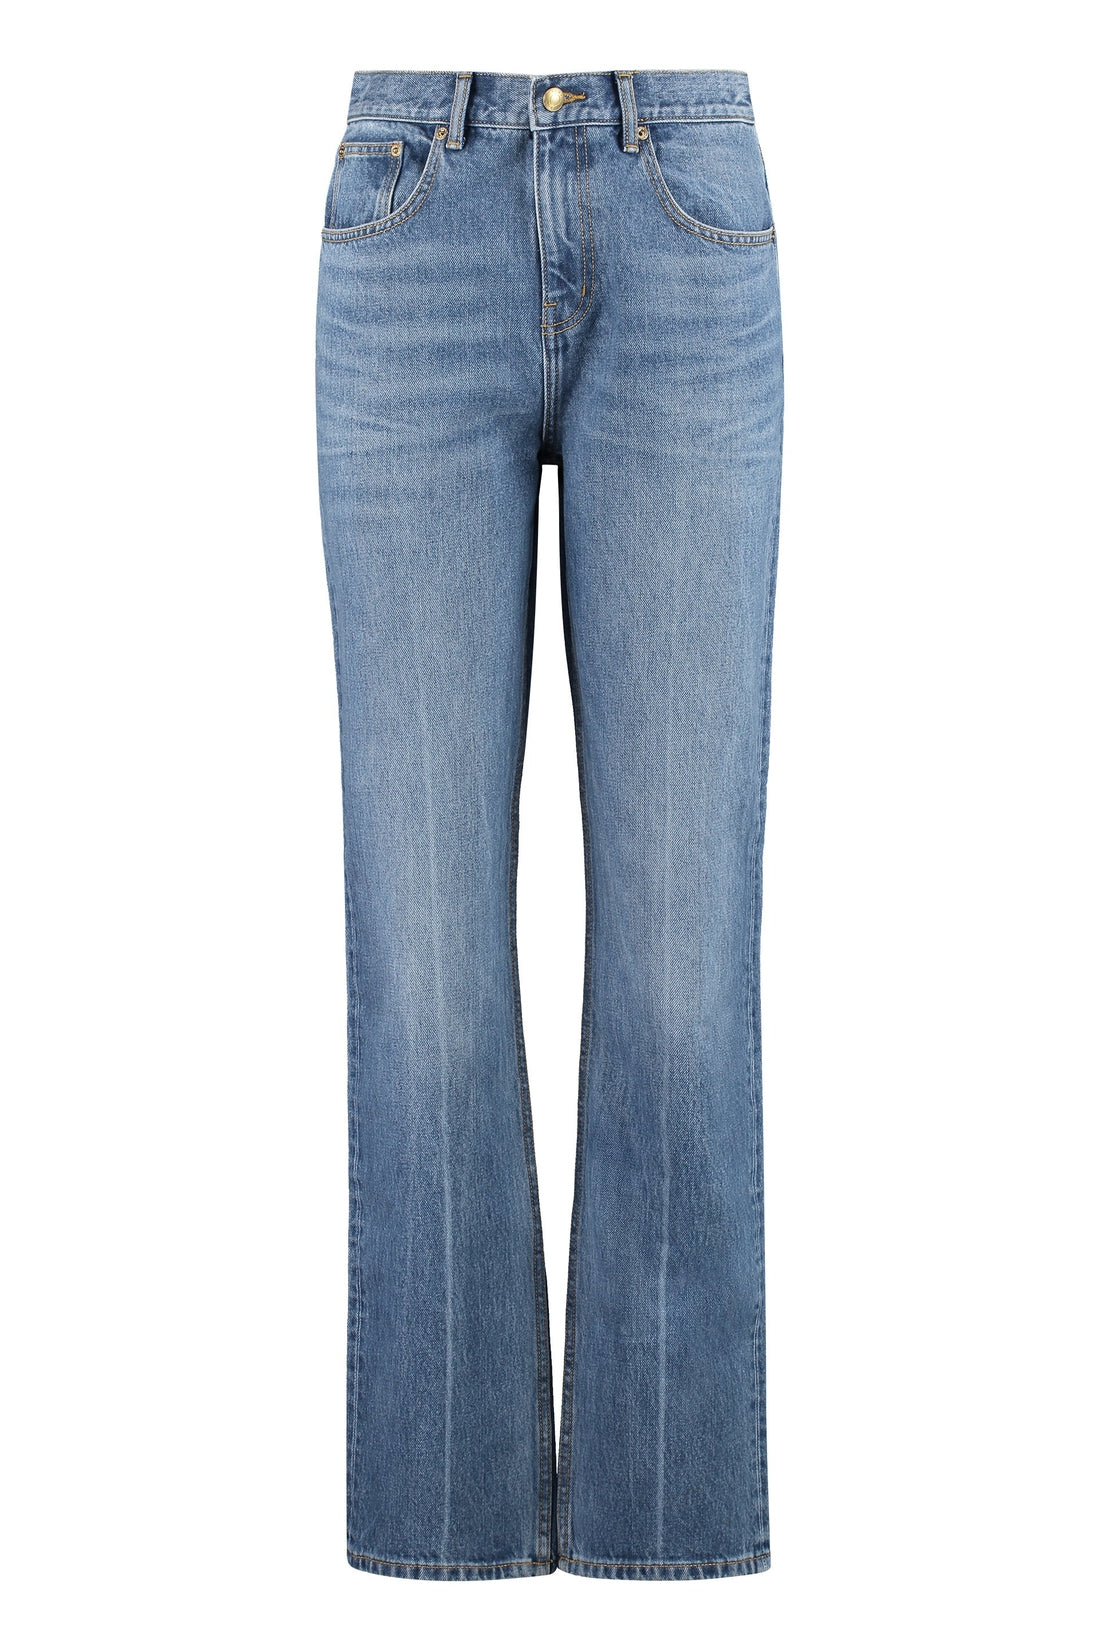 Tory Burch-OUTLET-SALE-5-pocket straight-leg jeans-ARCHIVIST